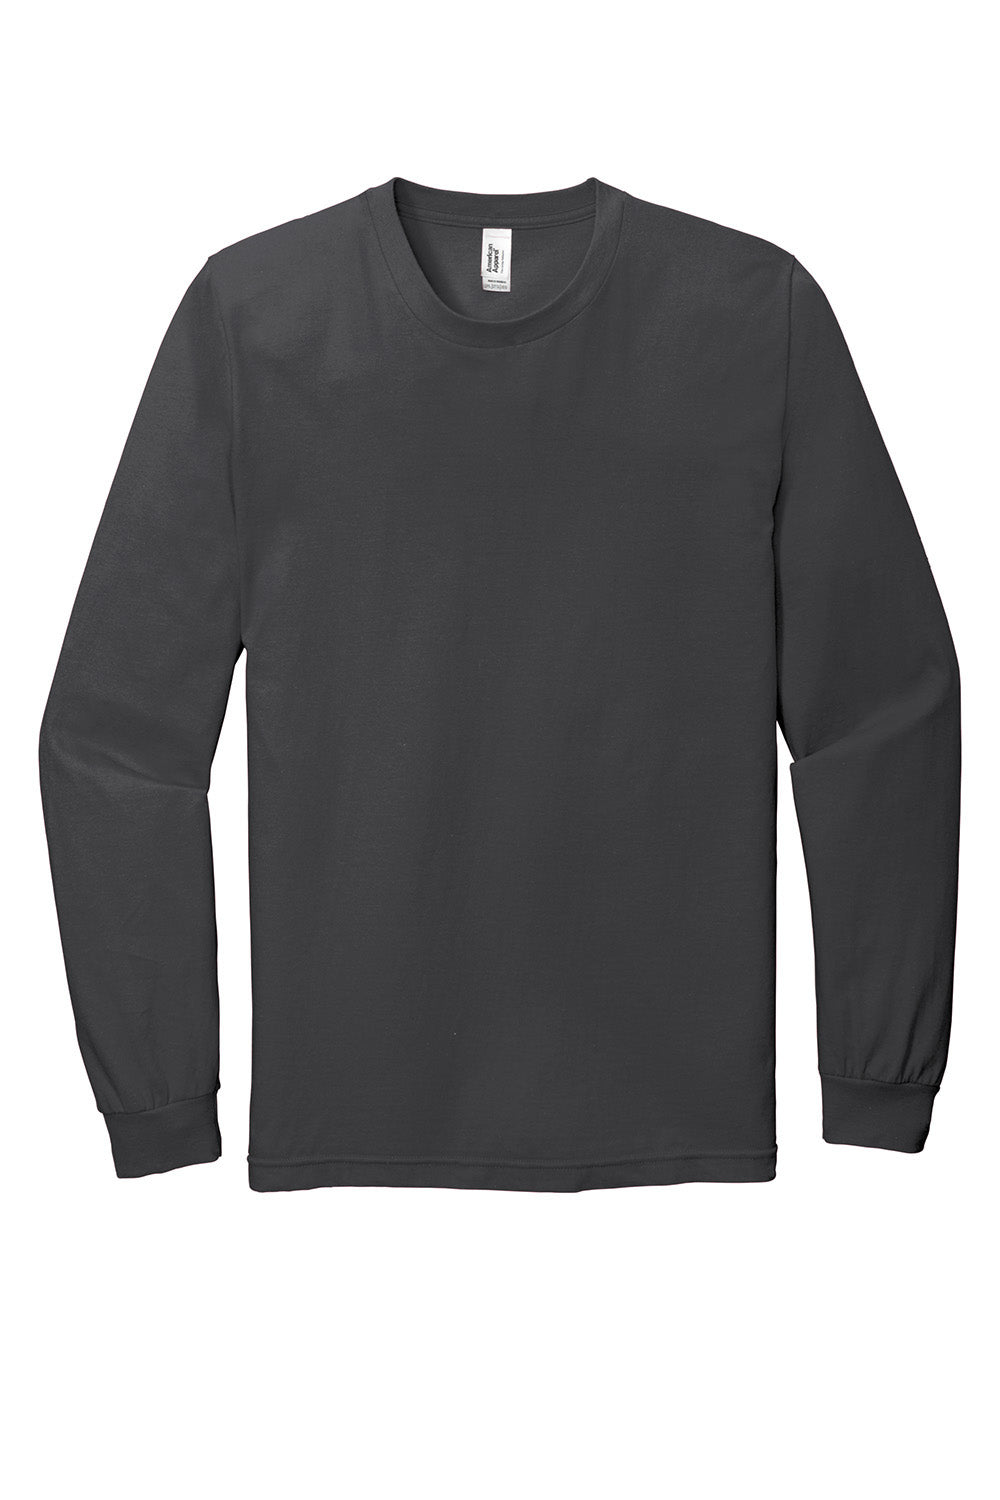 American Apparel 2007 Mens Fine Jersey Long Sleeve Crewneck T-Shirt Asphalt Grey Flat Front